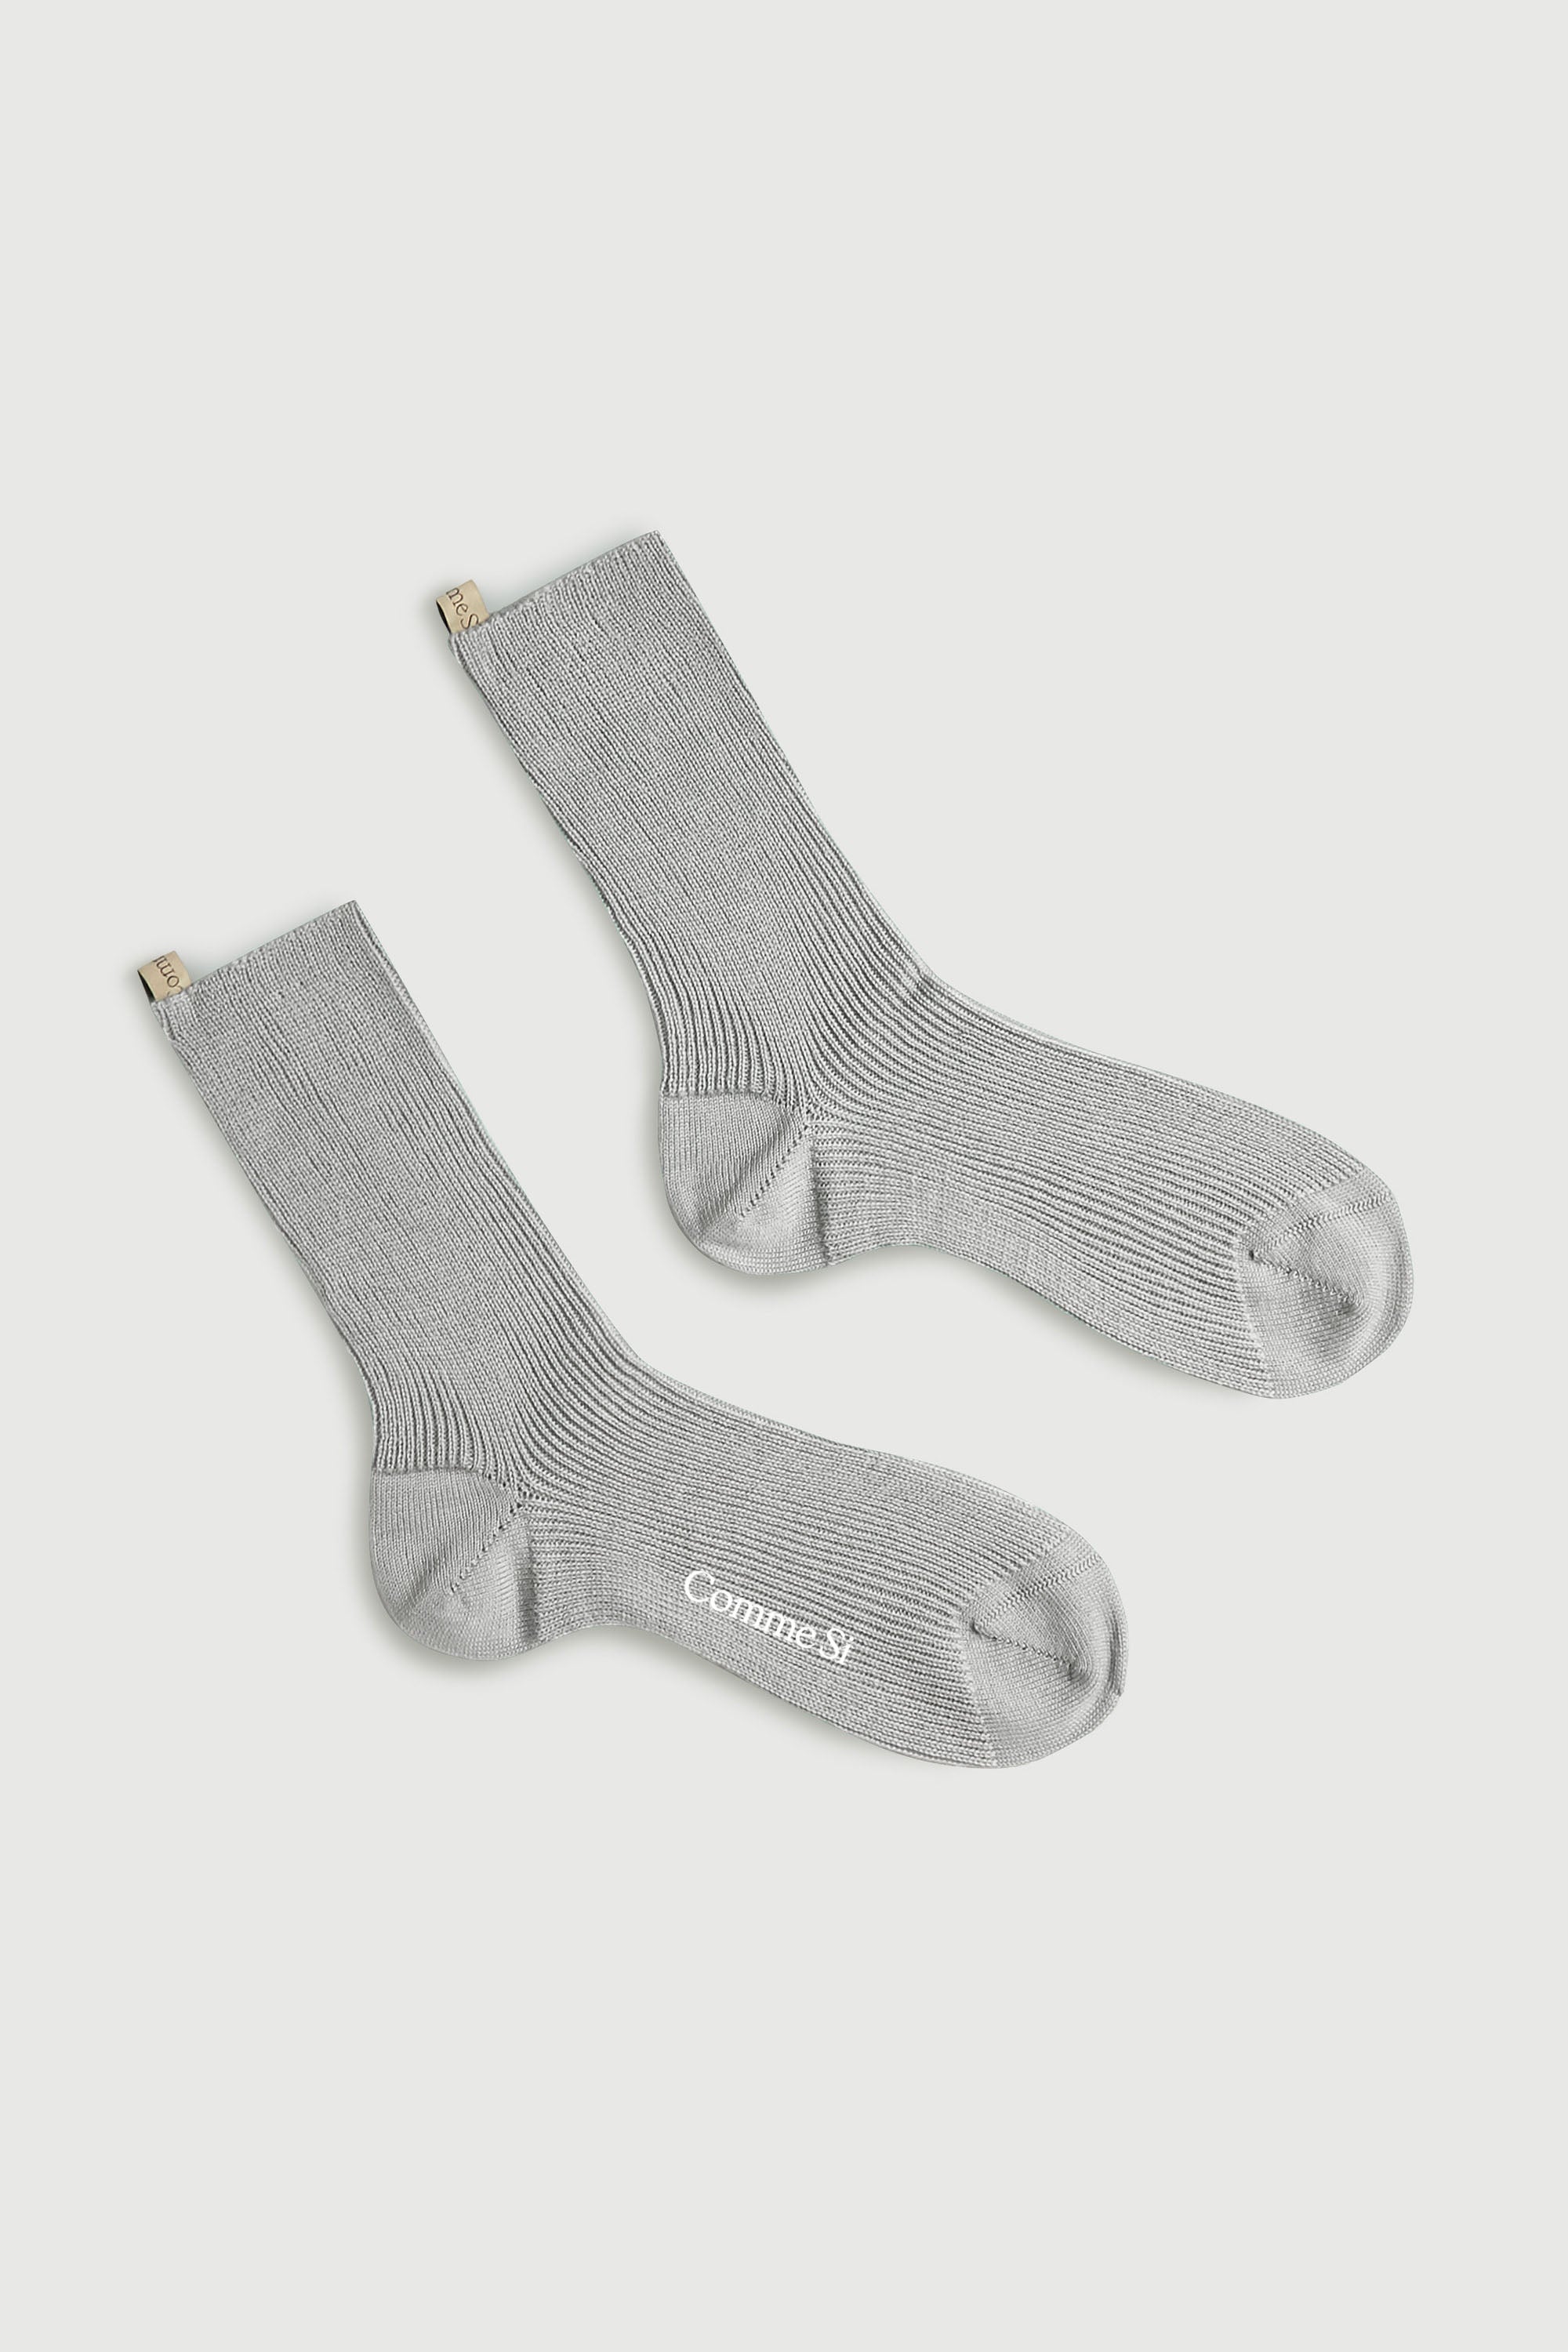 The Merino Sock in light grey, merino wool, by Comme Si